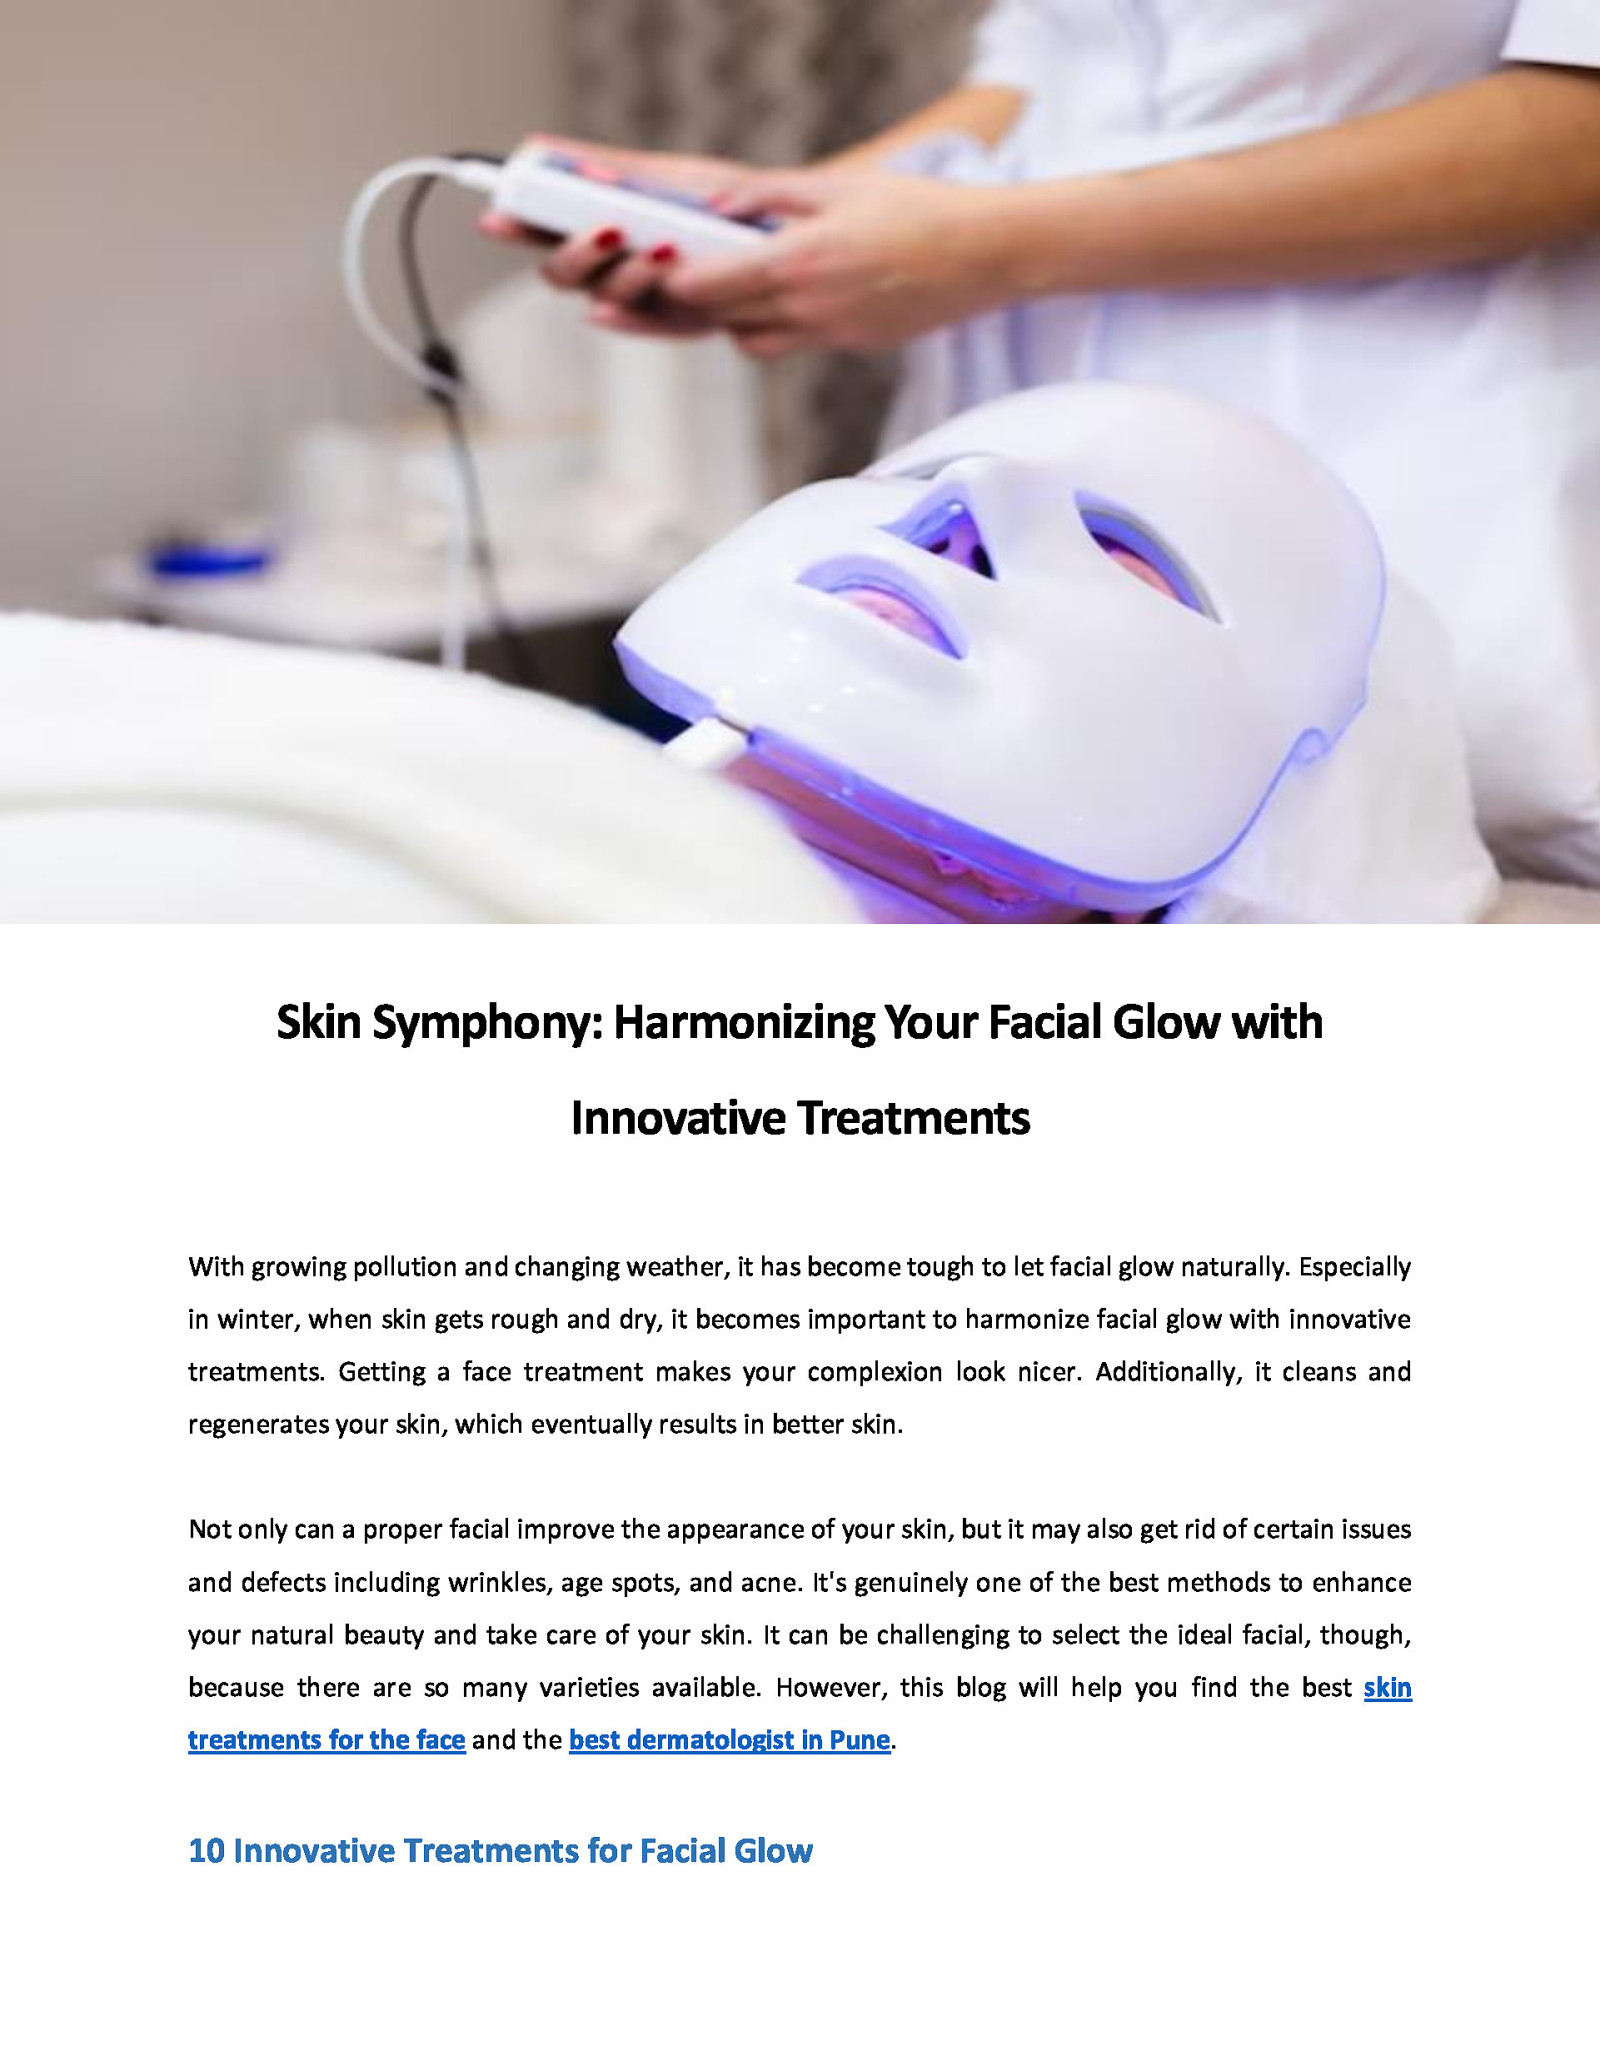 Skin Symphony: Harmonizing Your Facial Glow with Innovative Treatments